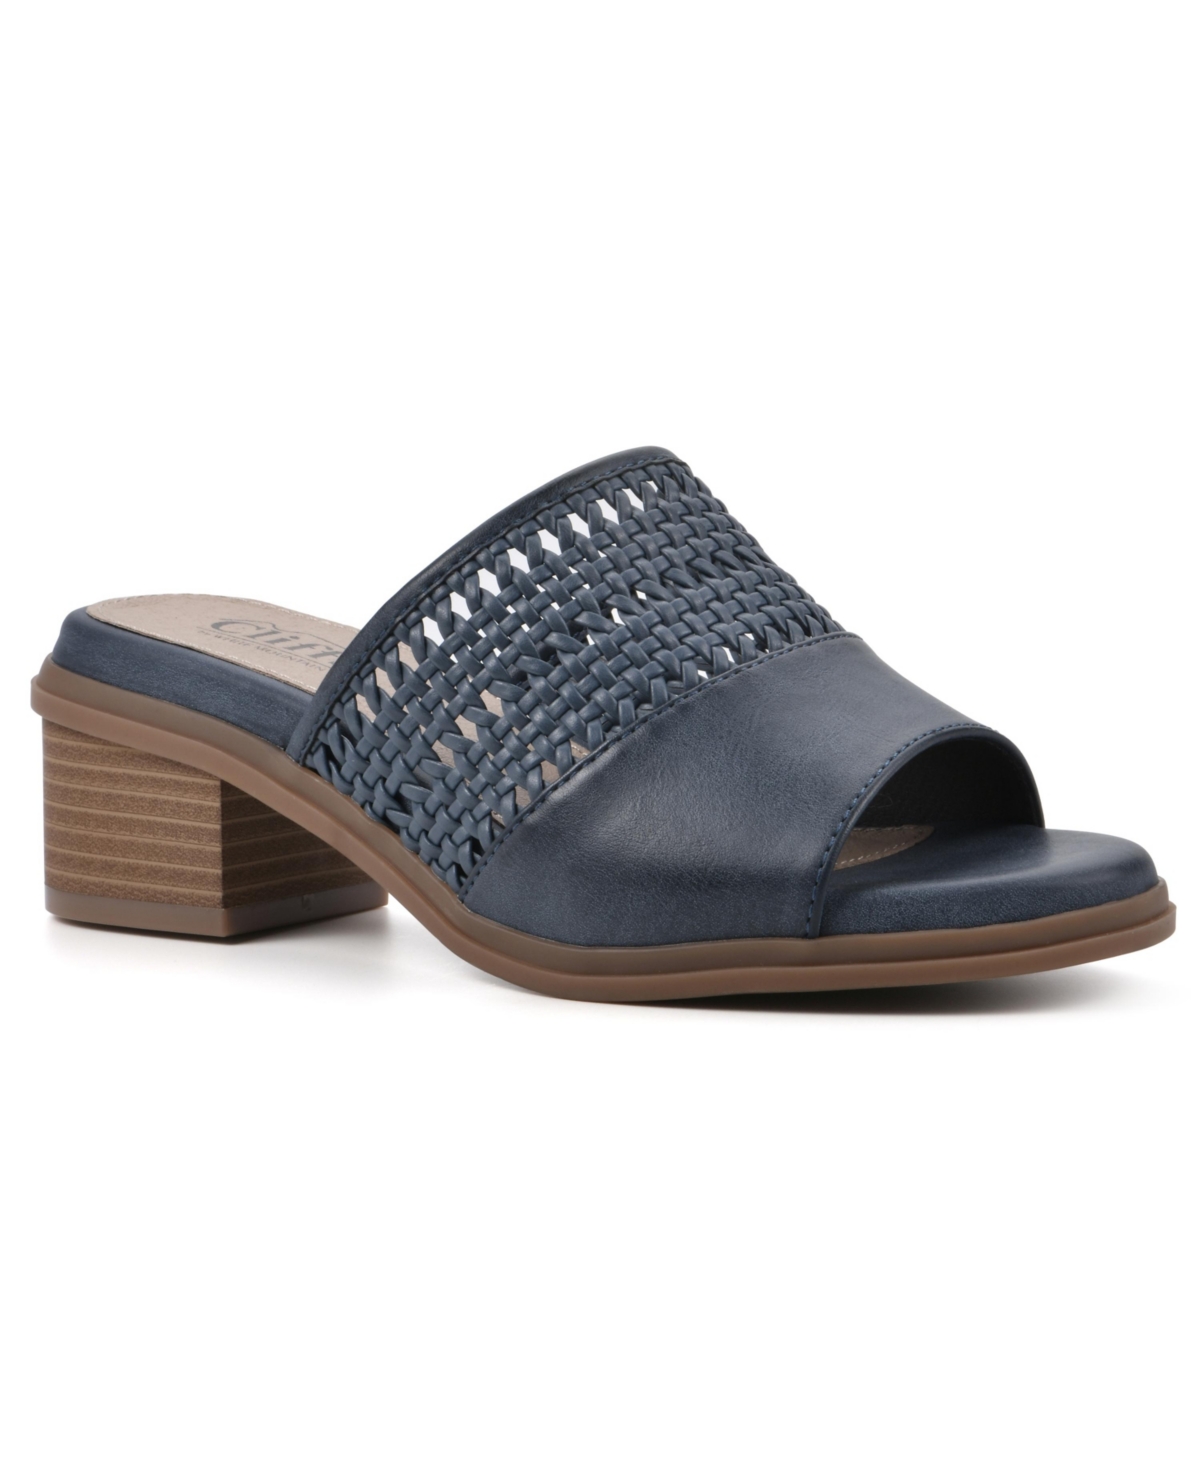 Women's Corley Comfort Sandal - Dark Blue, Burnished, Smooth